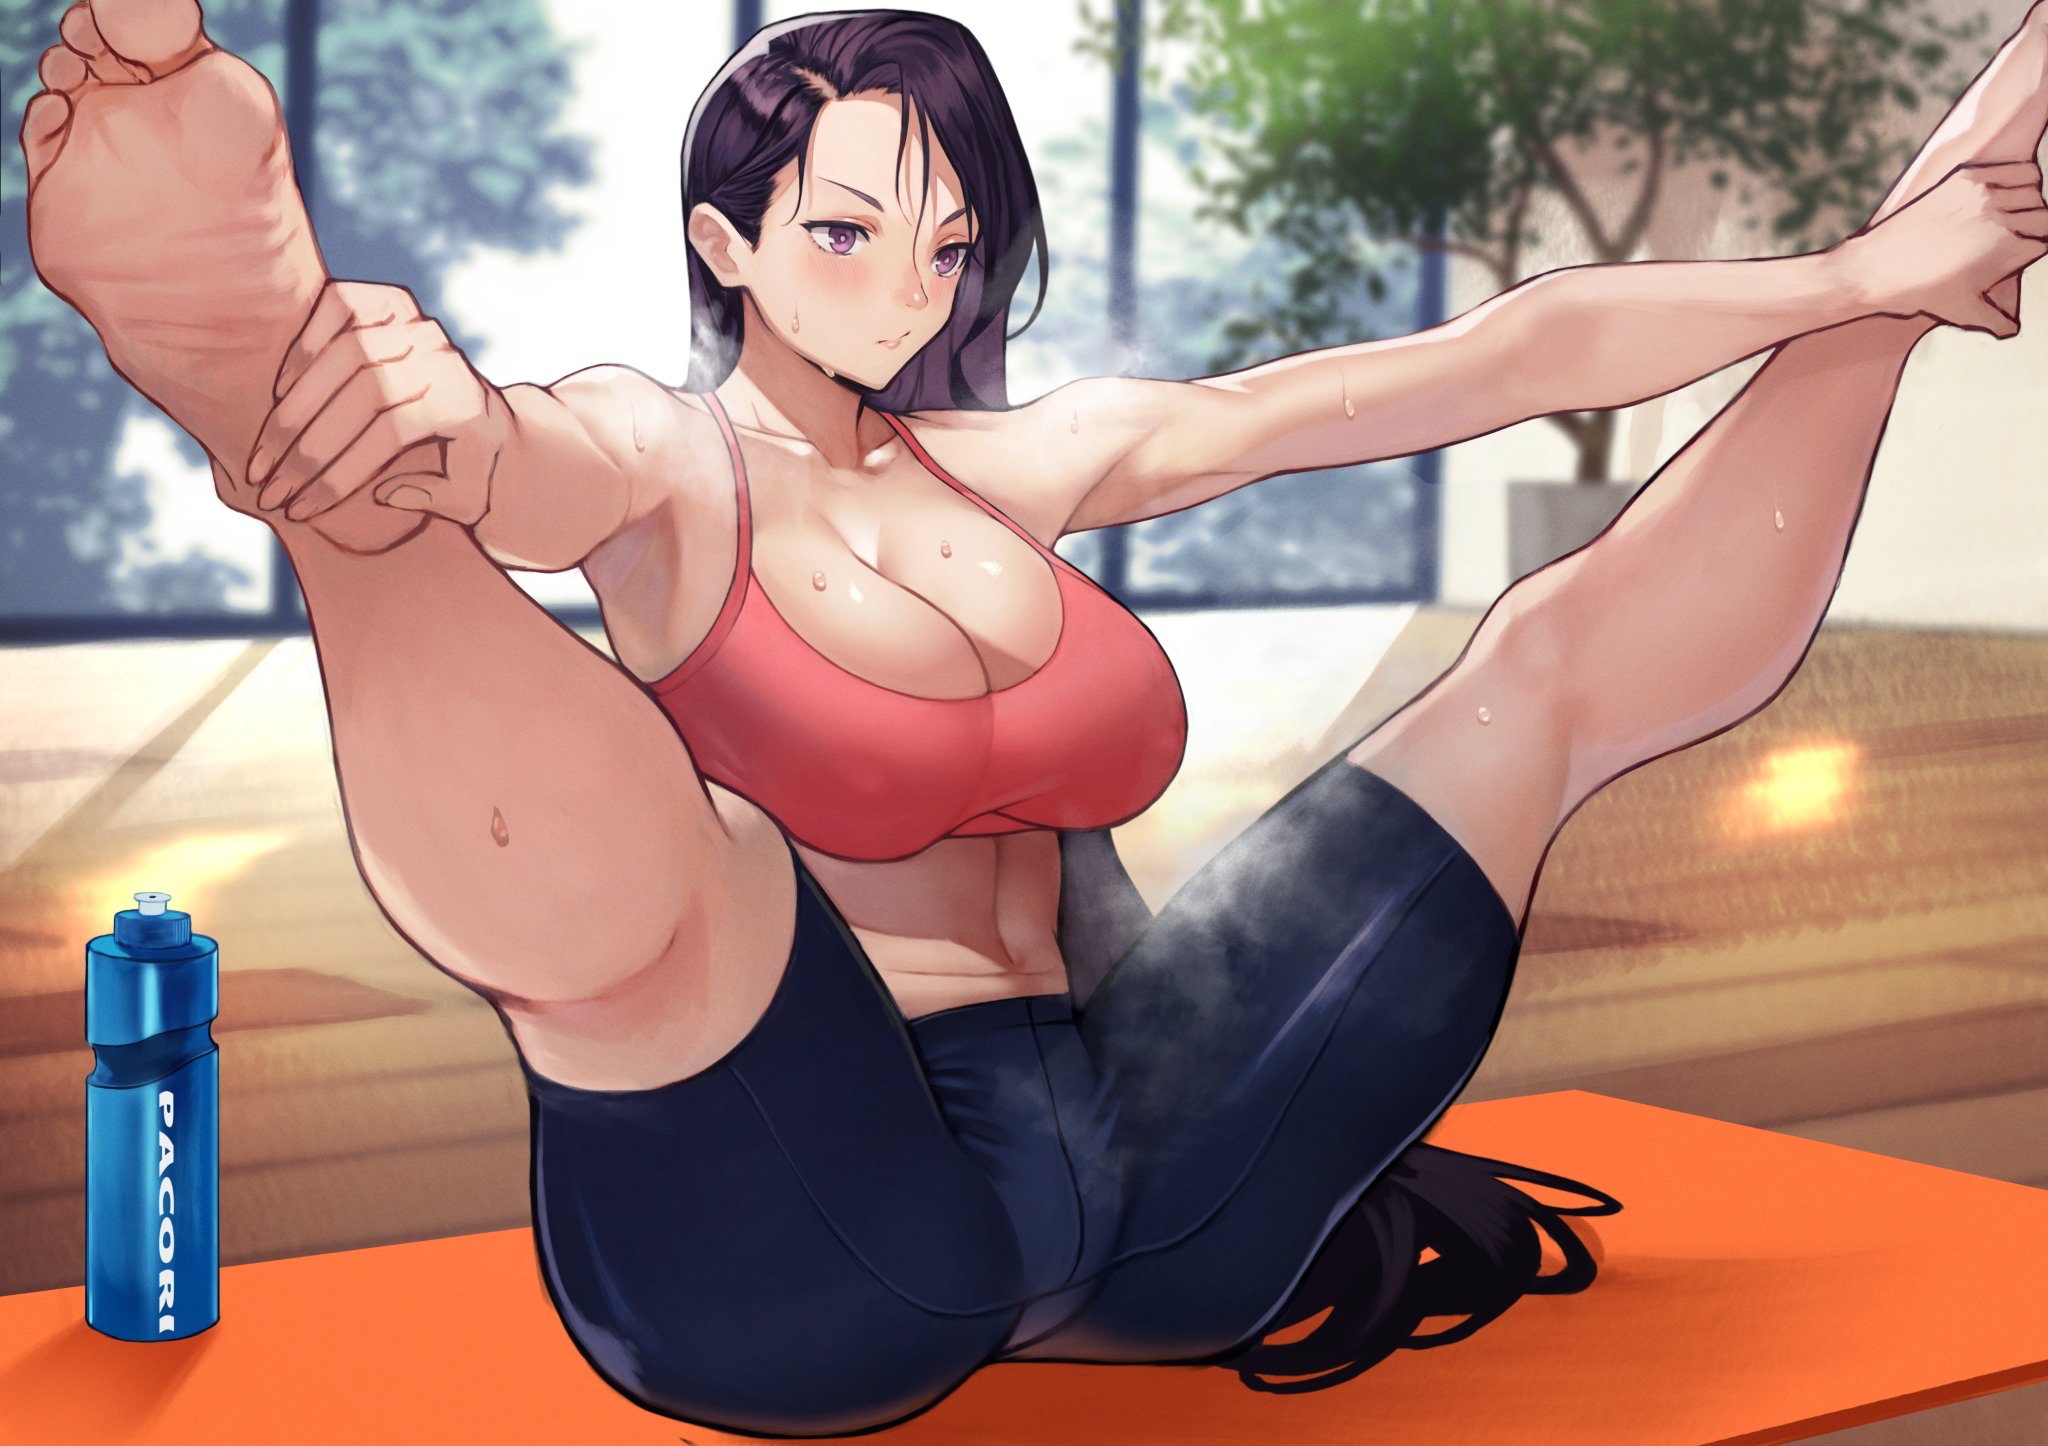 Anime 2048x1446 anime anime girls digital art artwork sweat gym clothes huge breasts cleavage legs up spread legs Yoshio (artist) nipple bulge